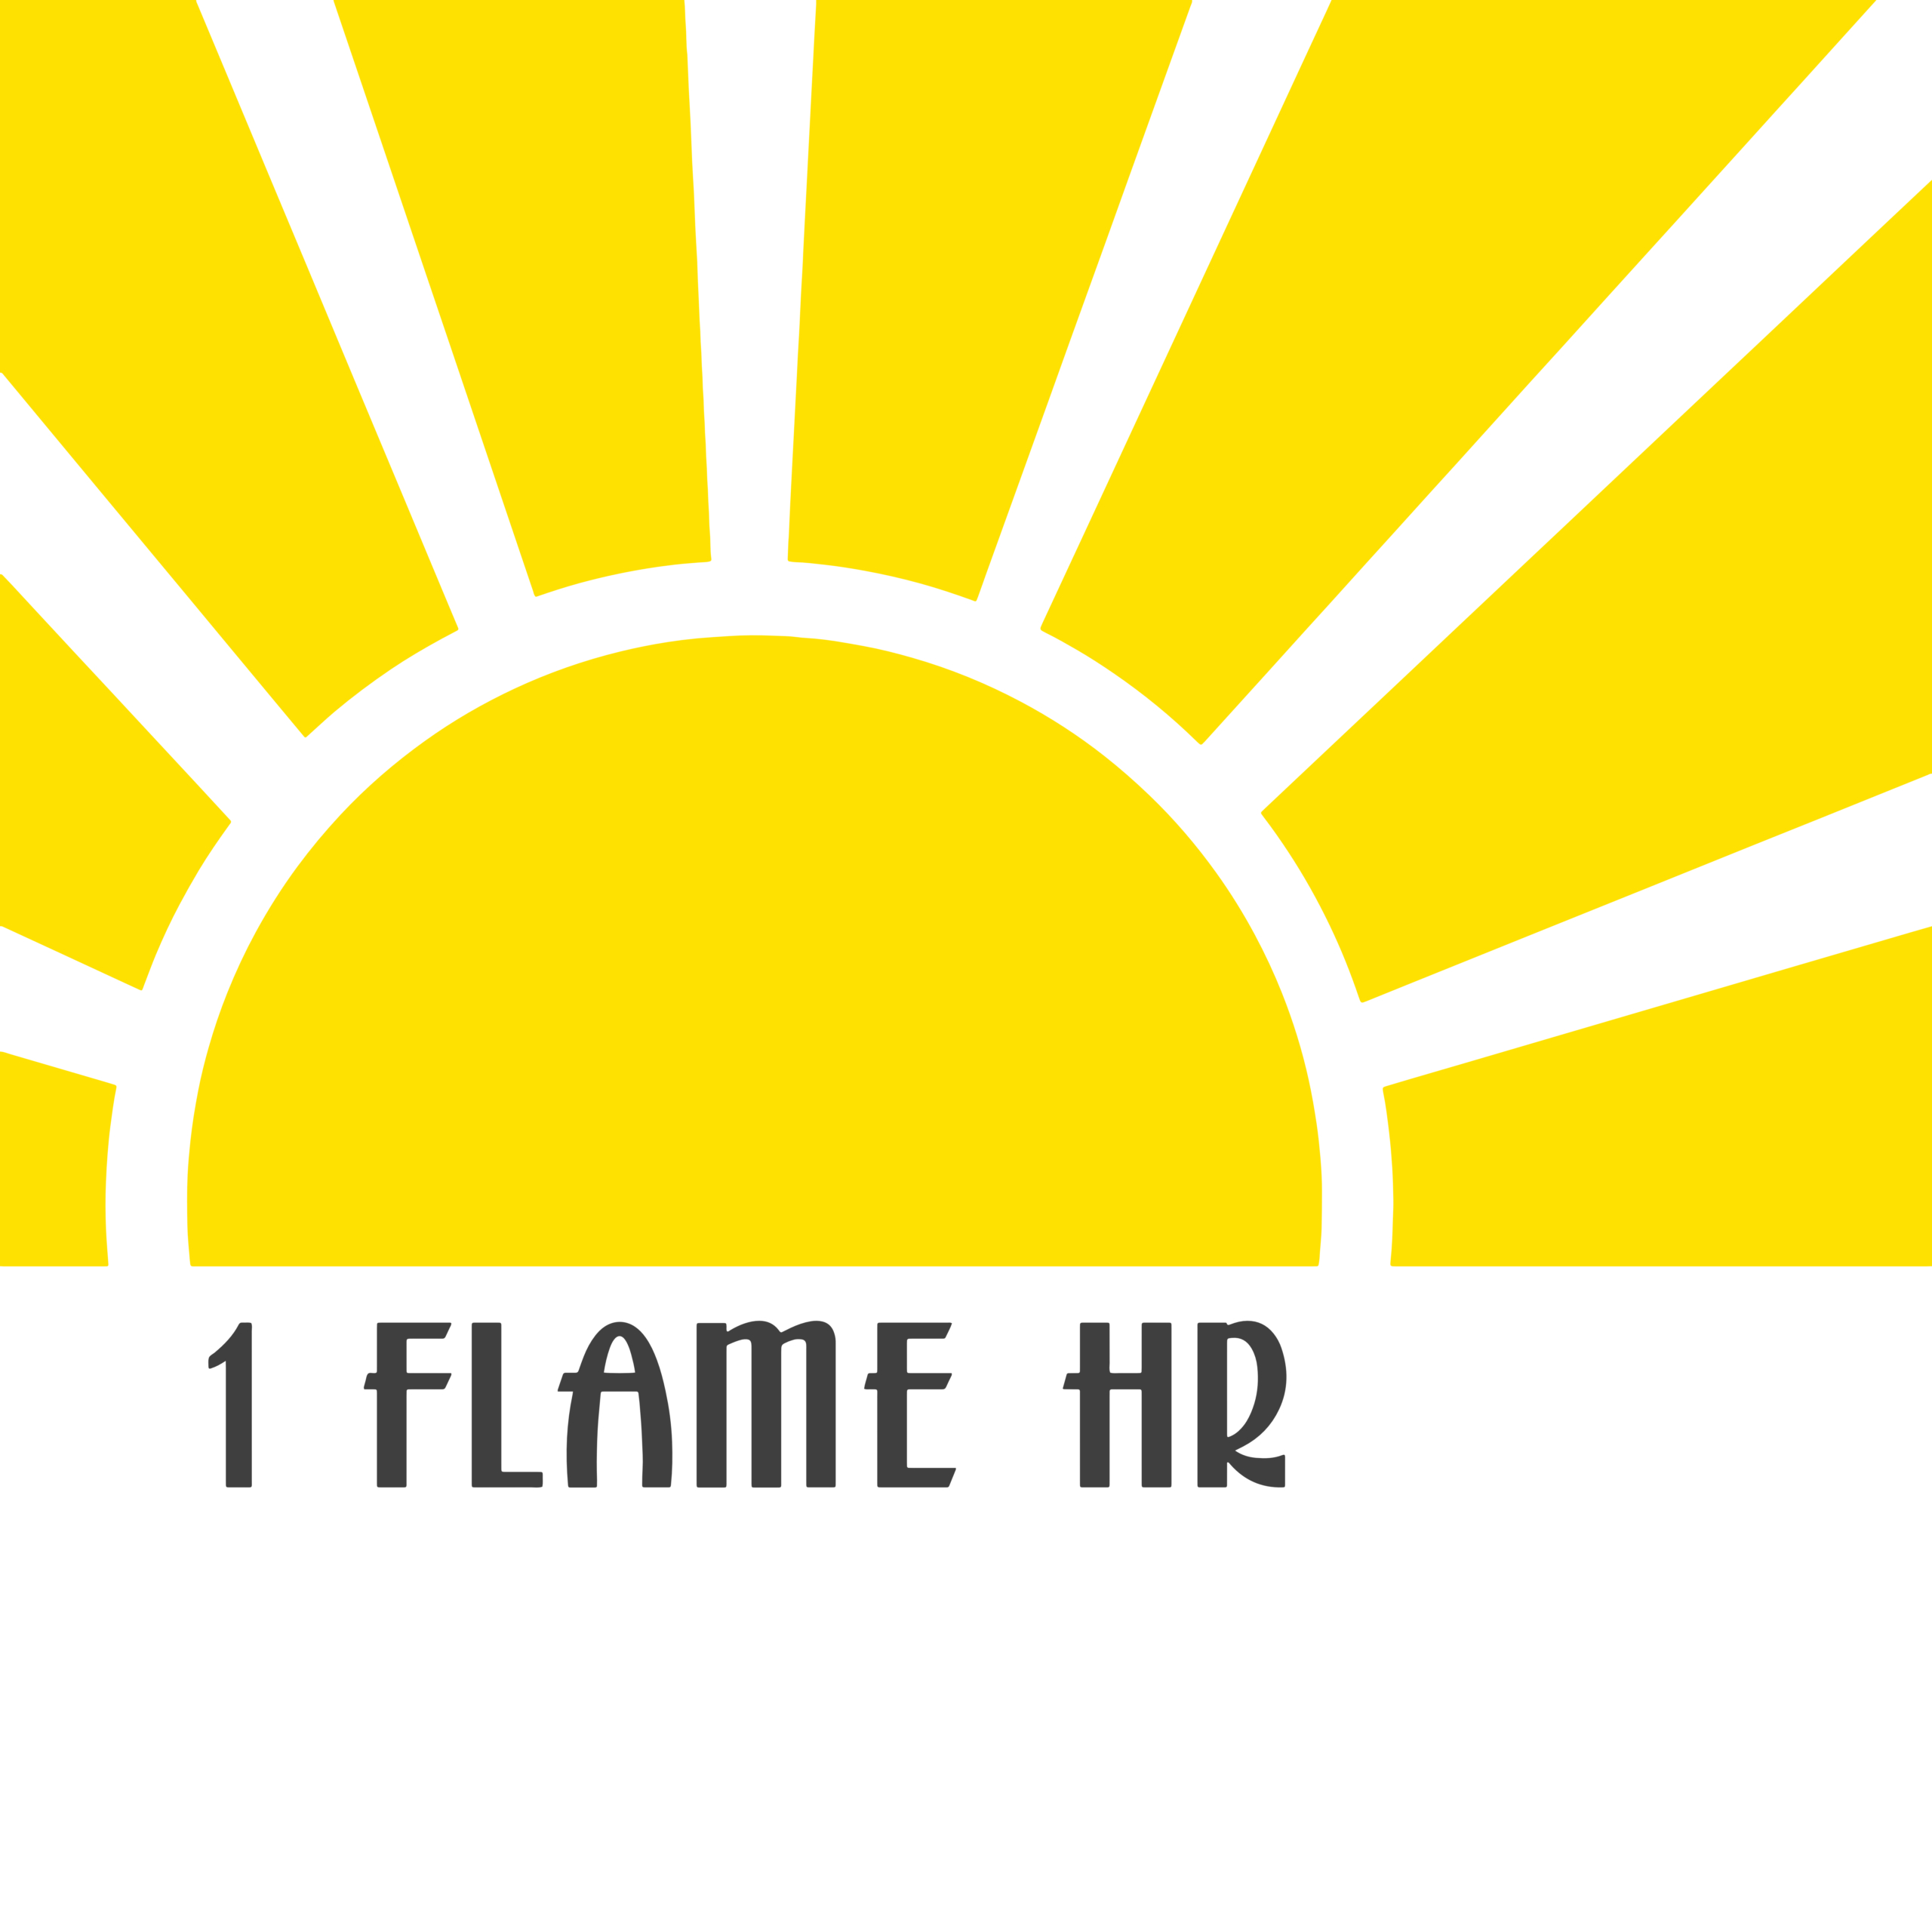 1 Flame HR